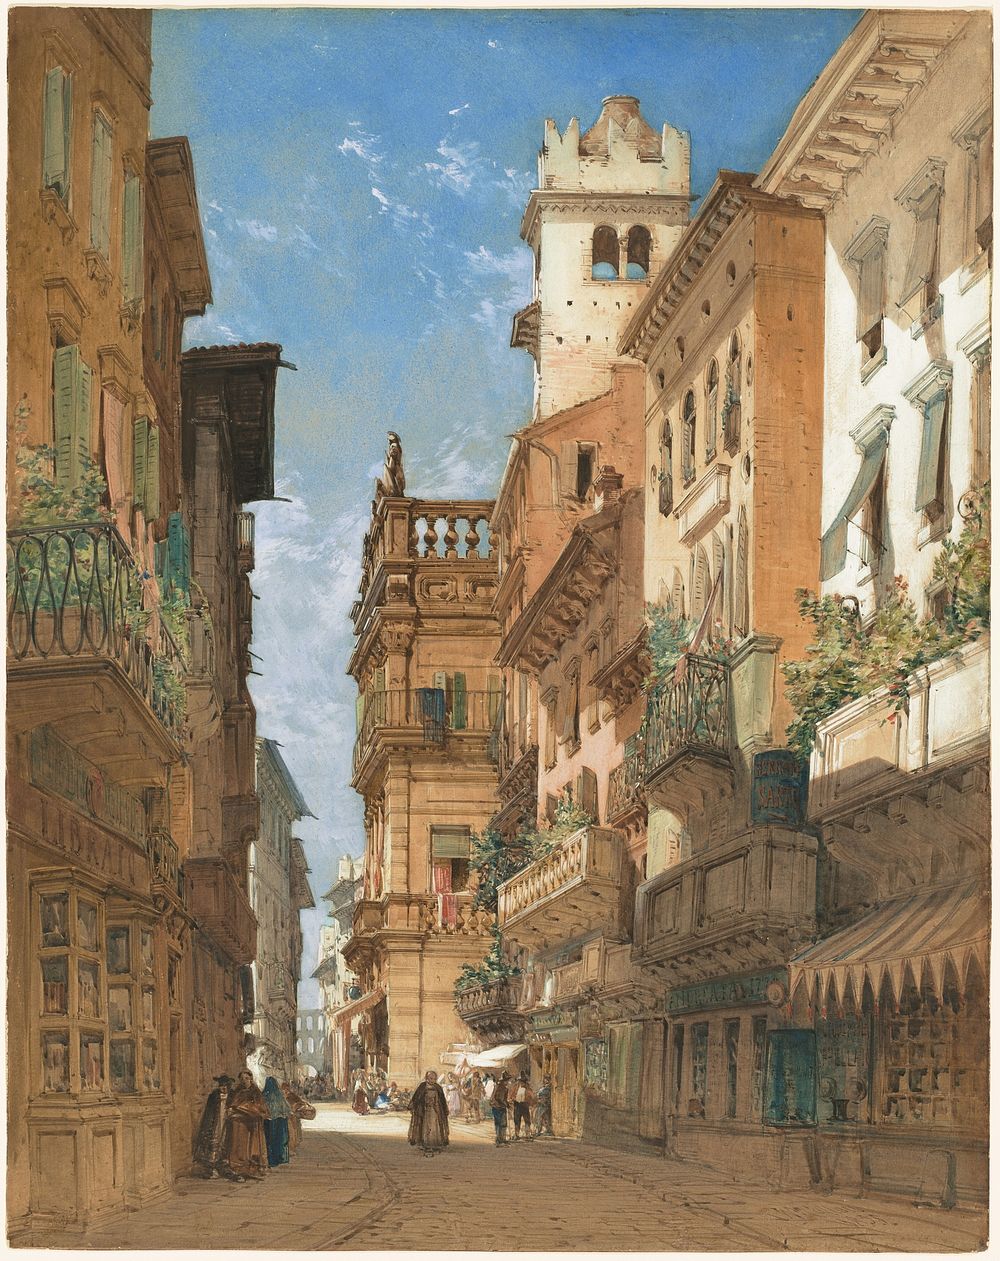 Corso Sant' Anastasia with the Palazzo Maffei in Verona (1855) by William Callow.  